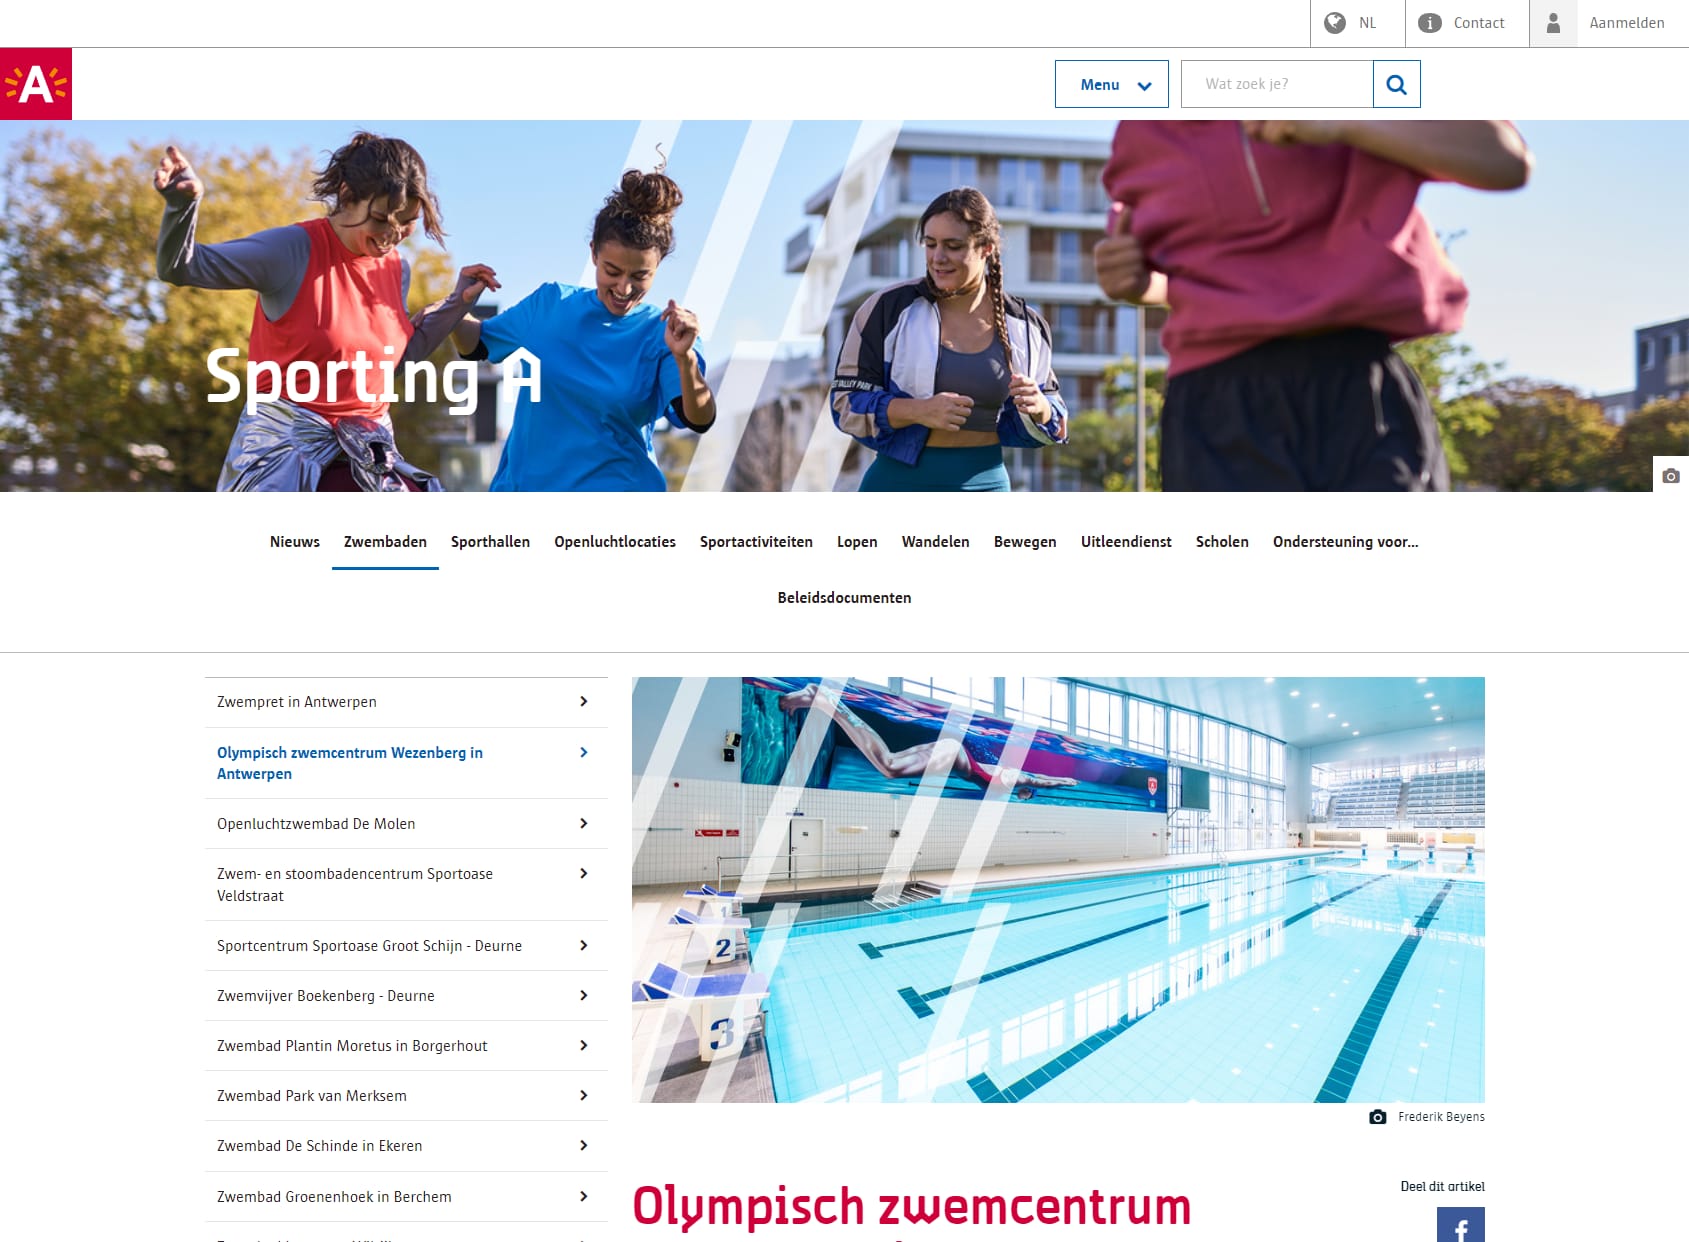 Olympic swimming center Wezenberg